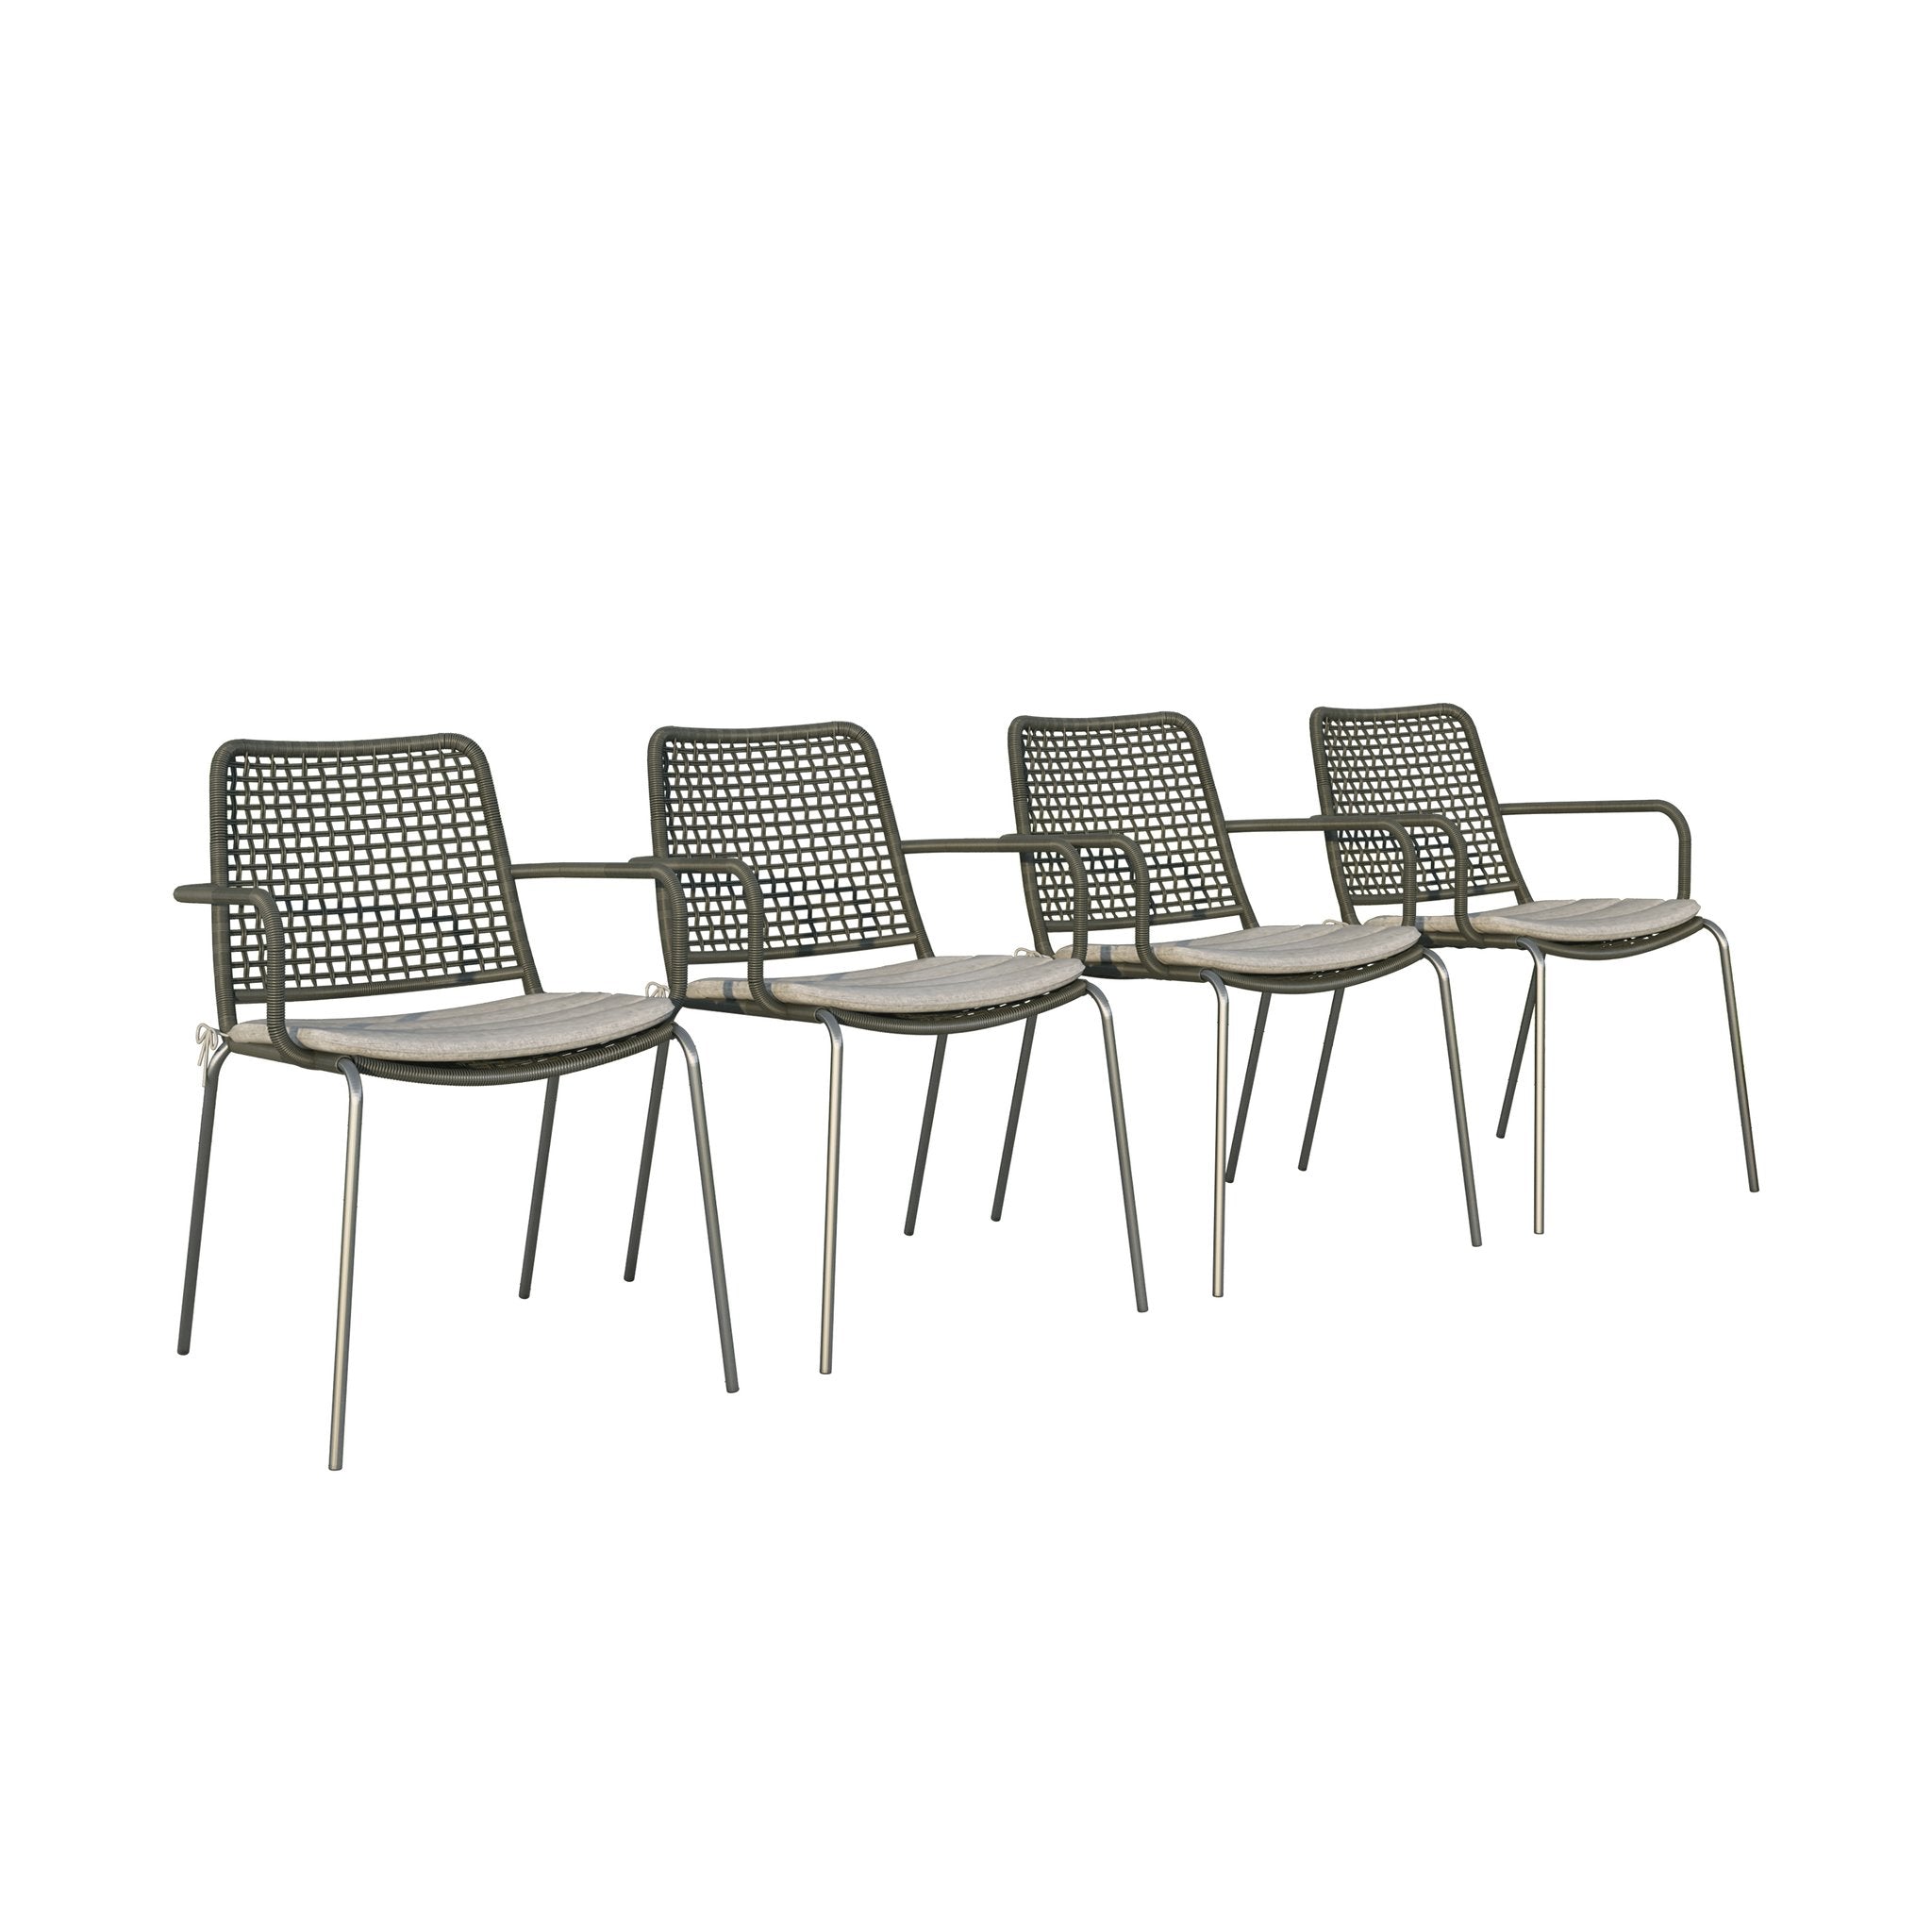 Oldbury Table & 4 Oberon Black Chairs With Cushions